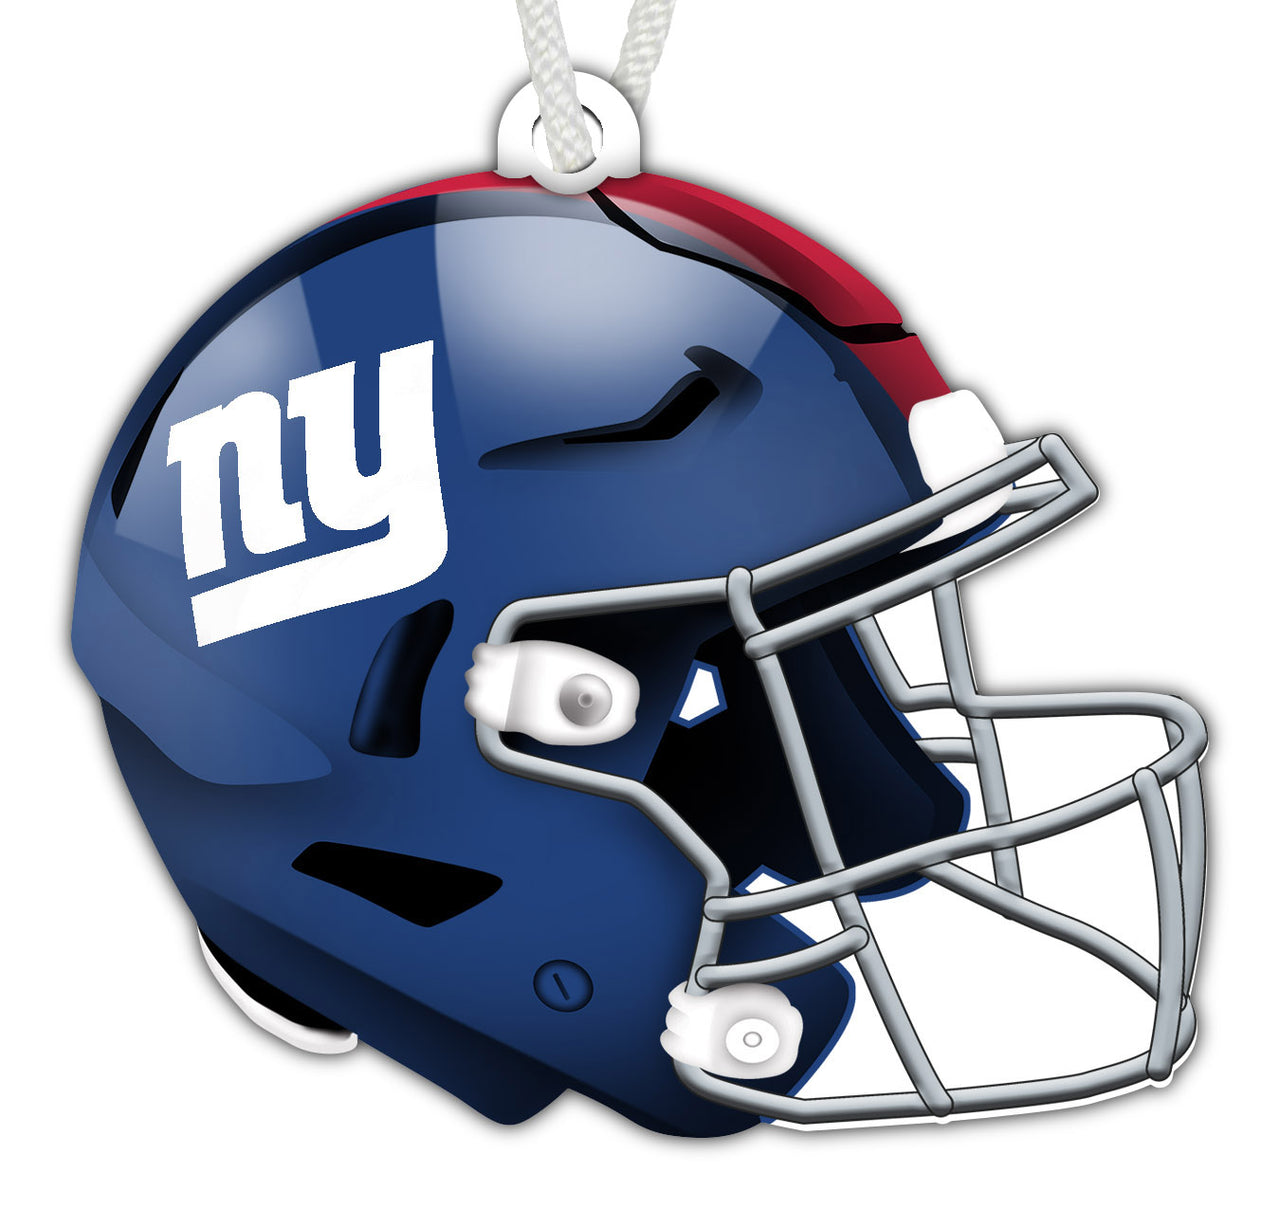 New York Giants Wooden Helmet Ornament - Dynasty Sports & Framing 